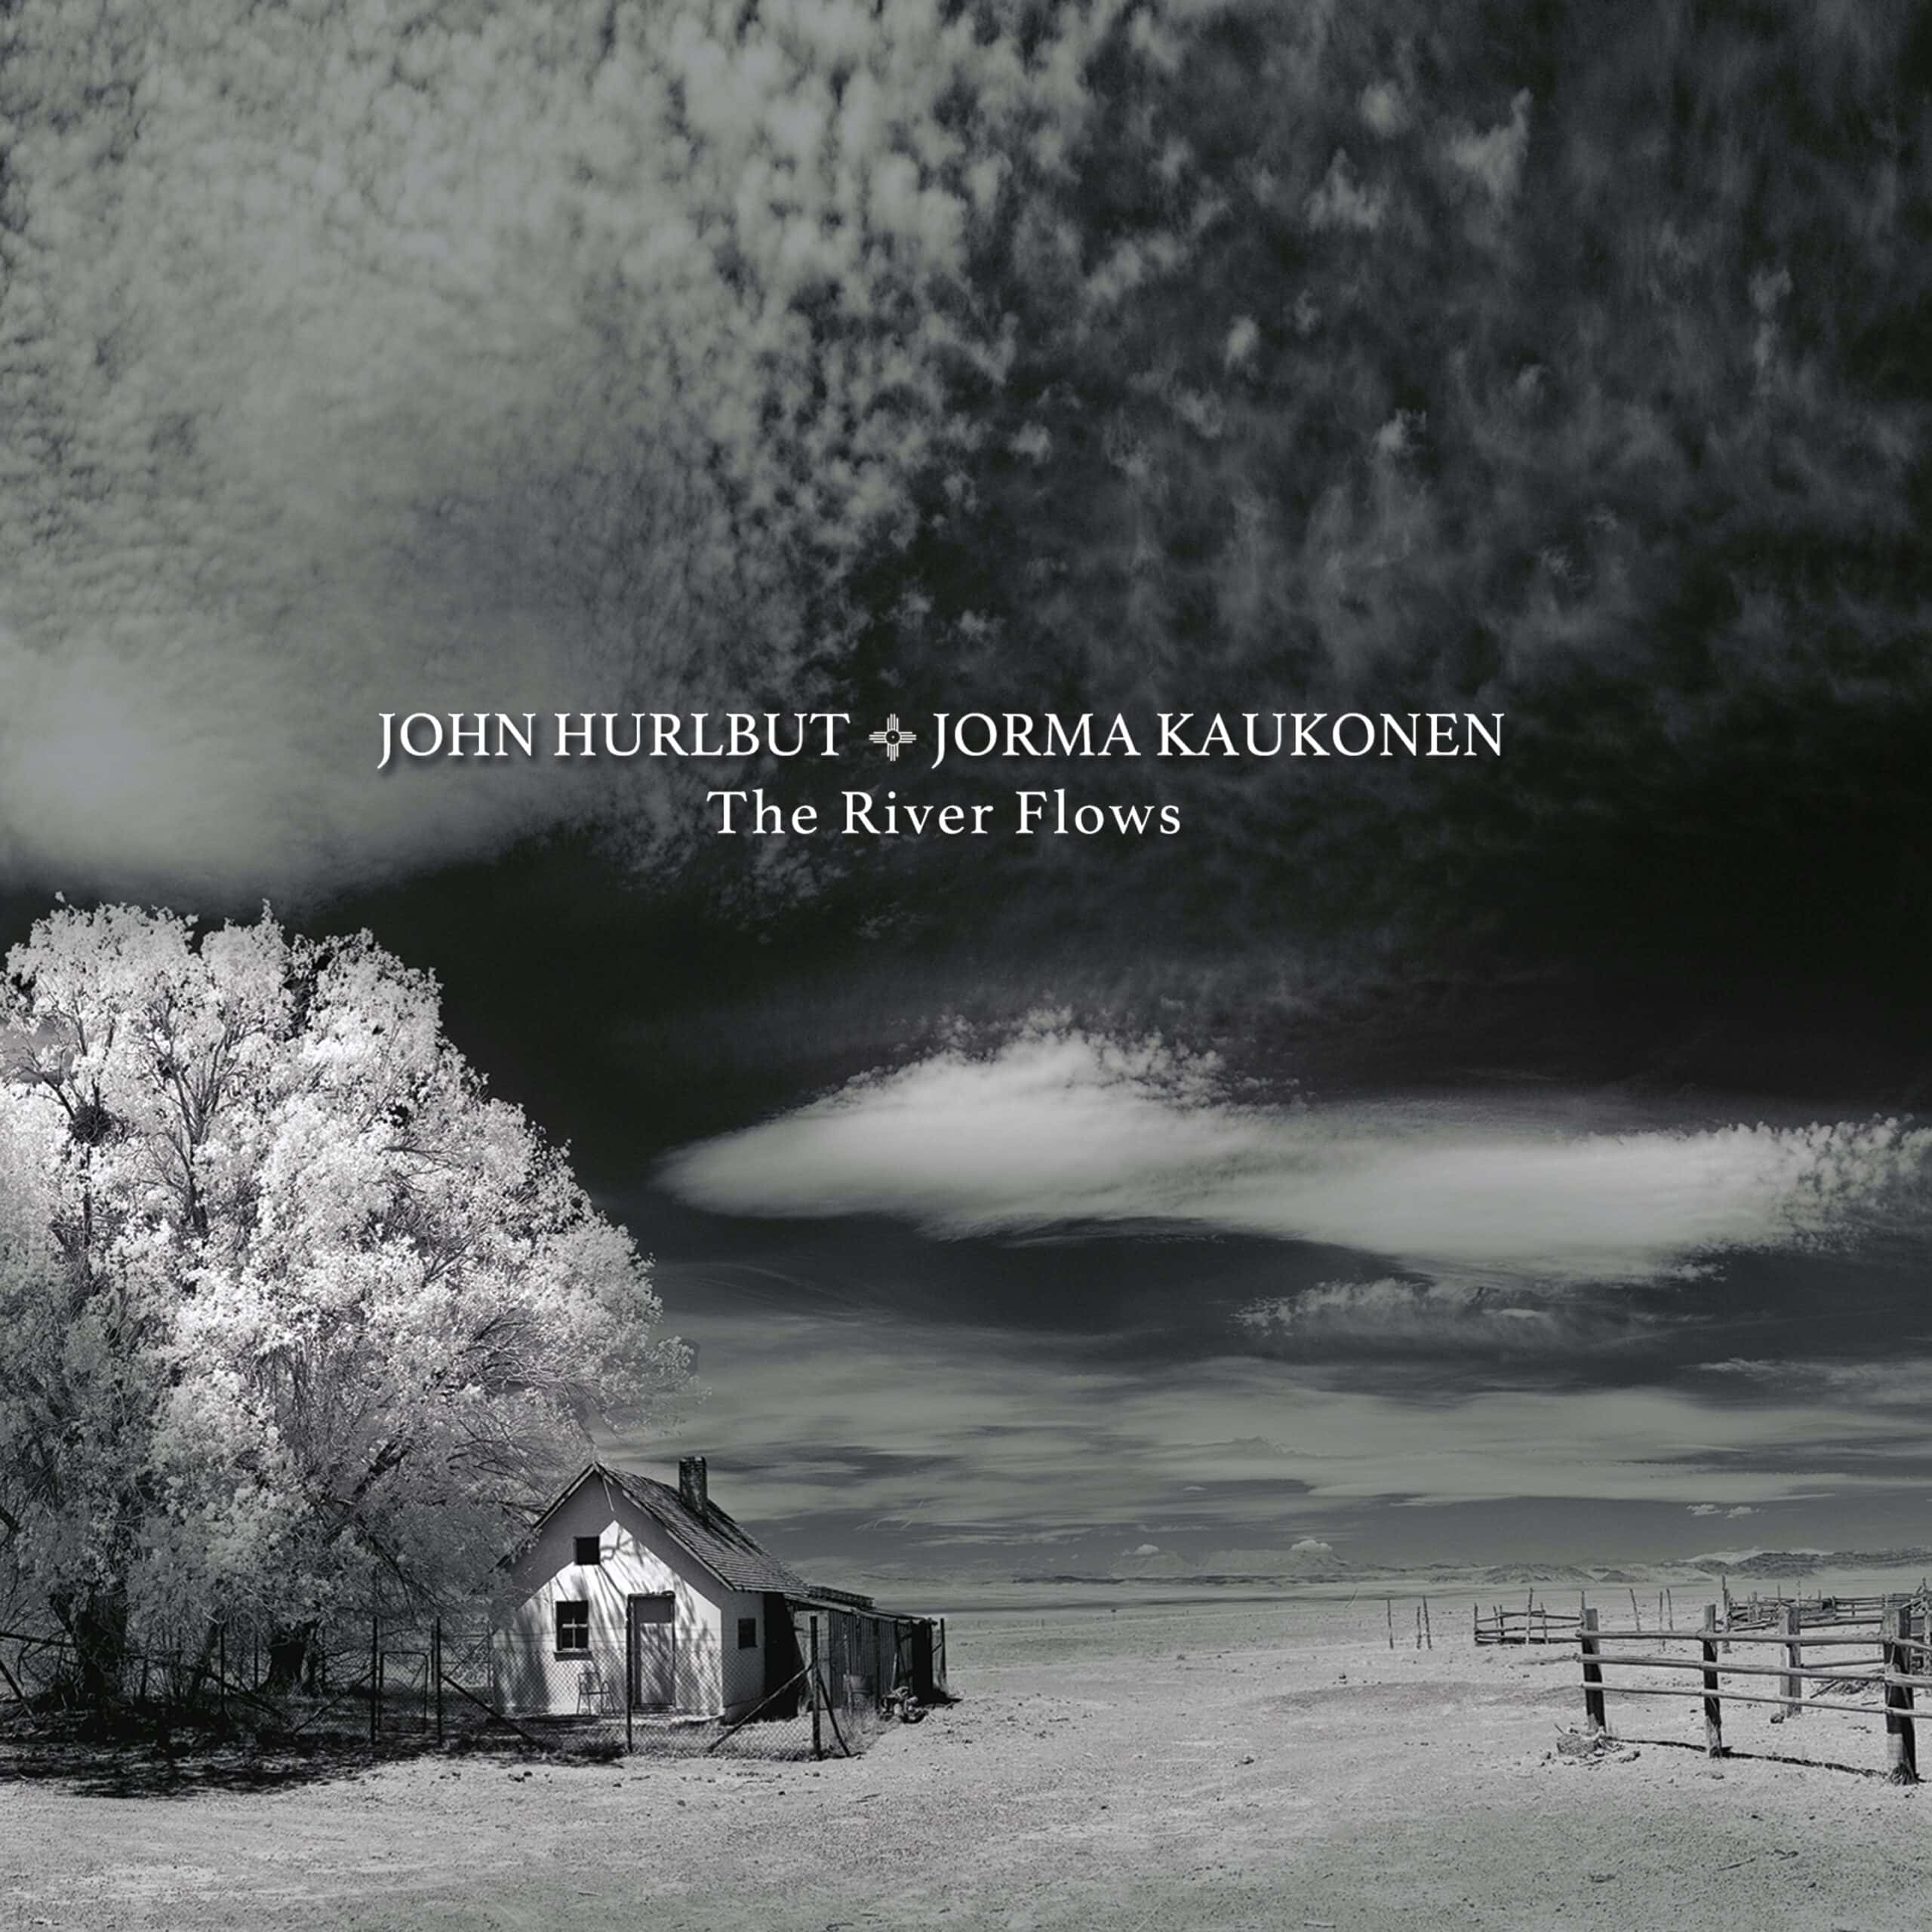 John Hurlbut + Jorma Kaukonen, The River Flows album cover.